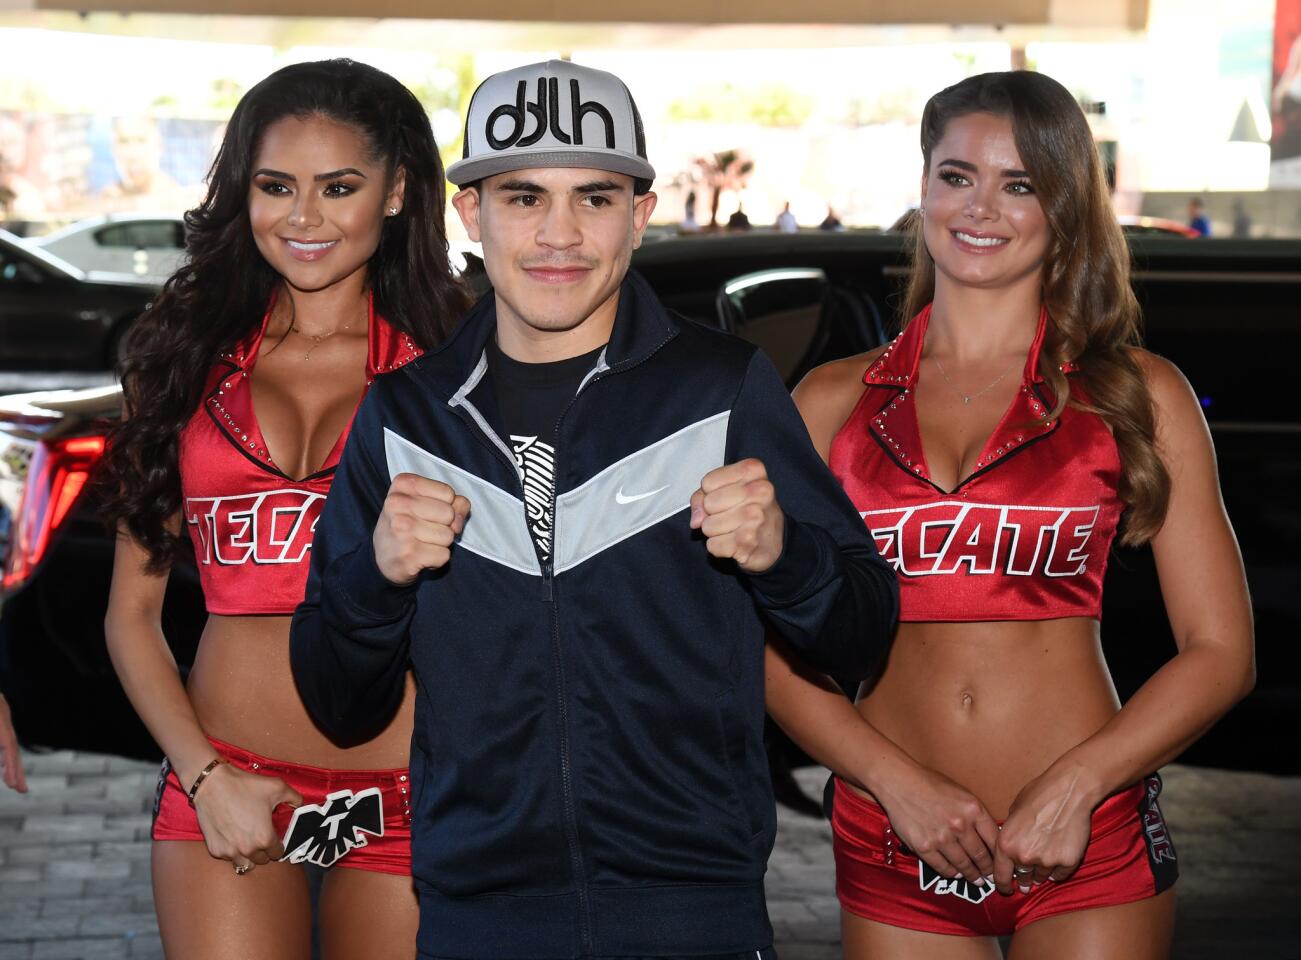 Gennady Golovkin v Canelo Alvarez - Fighter Arrivals